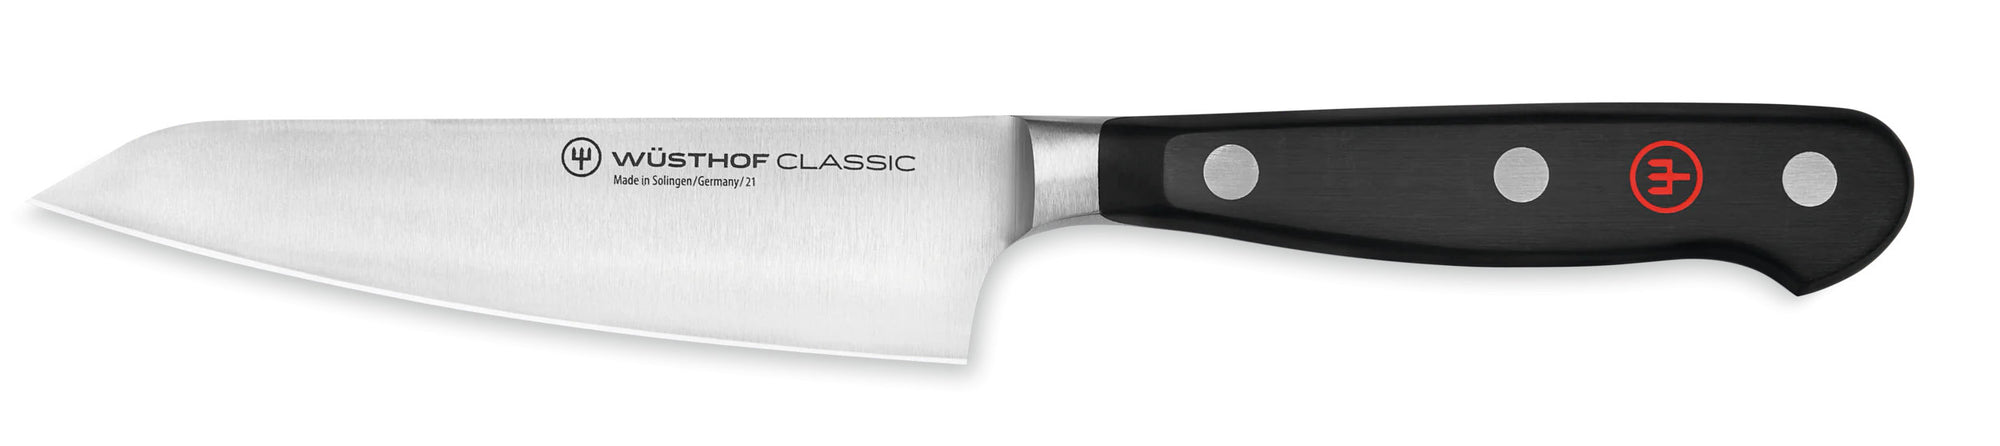 Wusthof Classic Asian Utility Knife, 4.7-inch (12 cm)